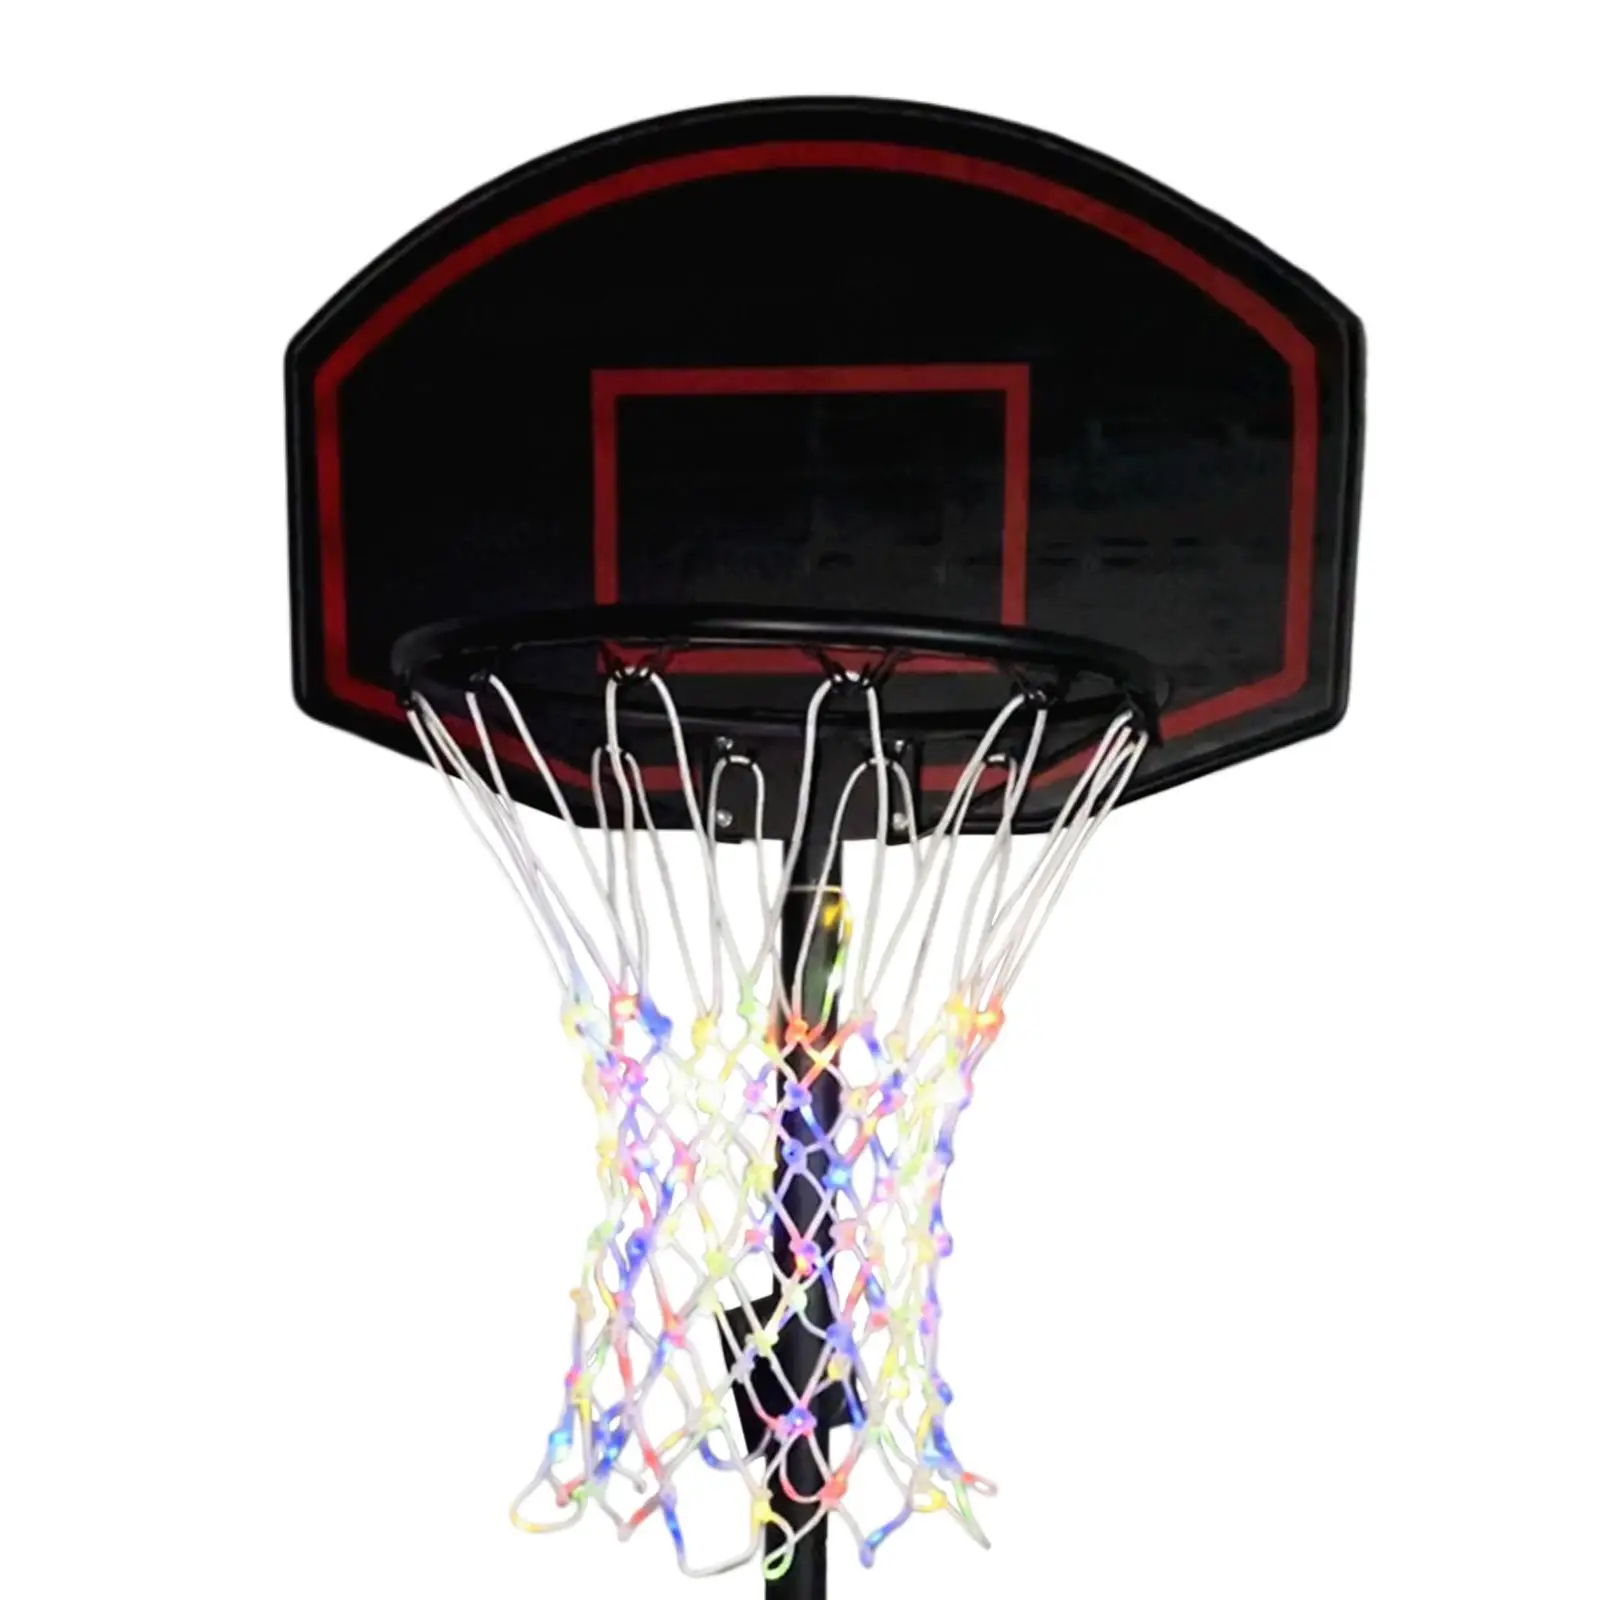 LED Basketball hoop Remote Control Luminous Outdoor Nylon Hoop Net for Pool Basketball Training Outside Adults Boys Girls